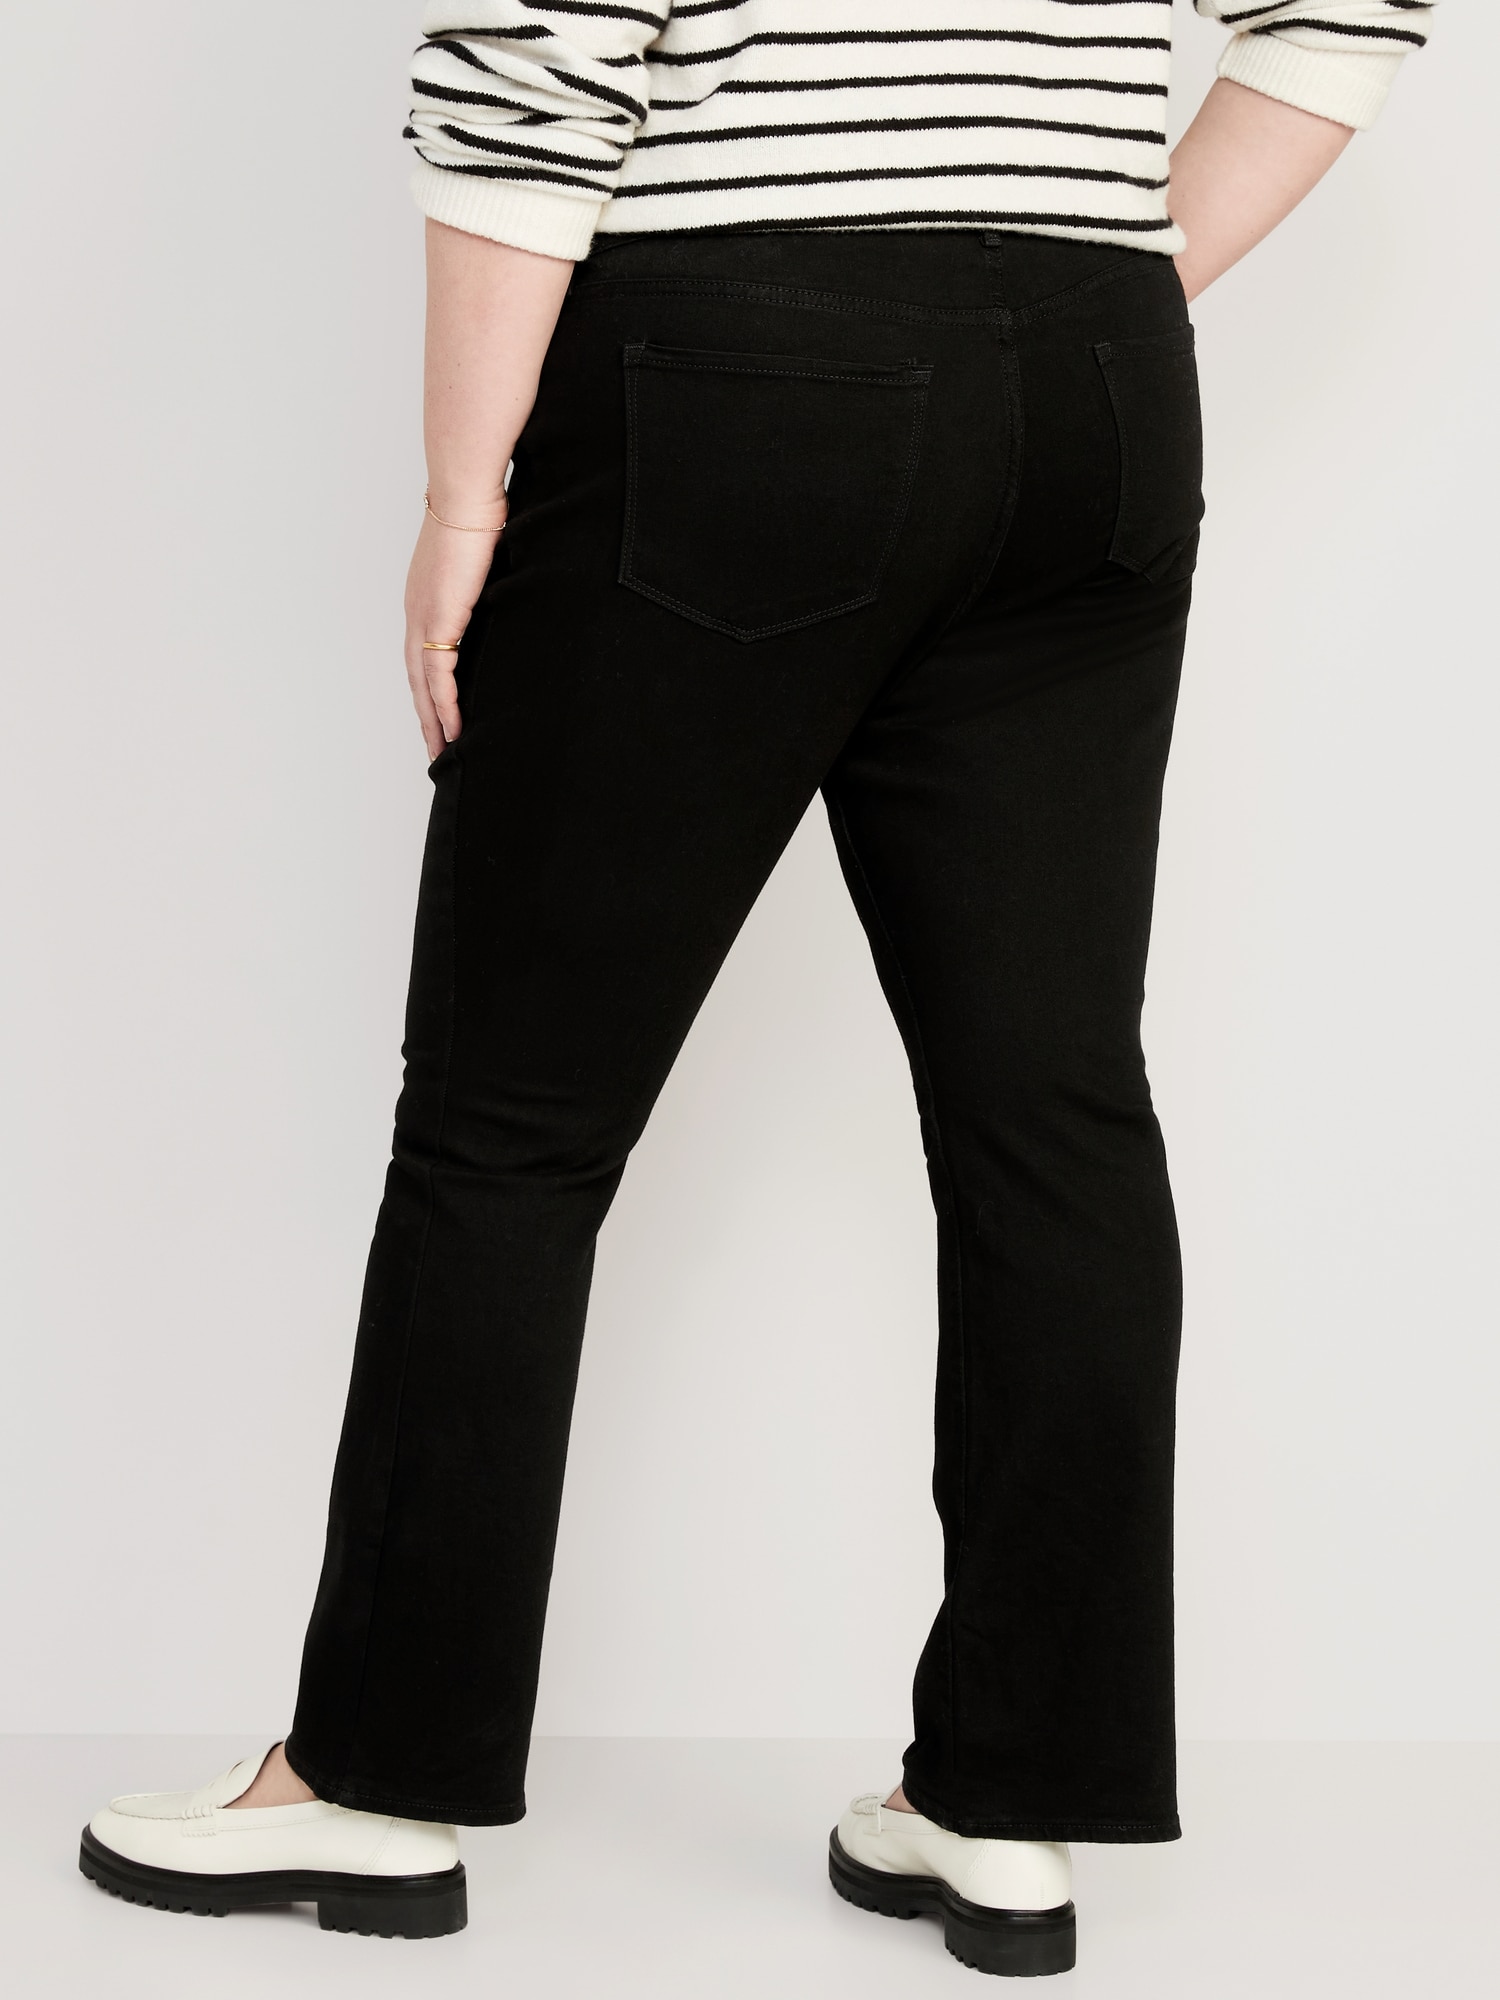 Women's Hipster Jeans Pants Bootcut Denim Black Stretch Zip Belt